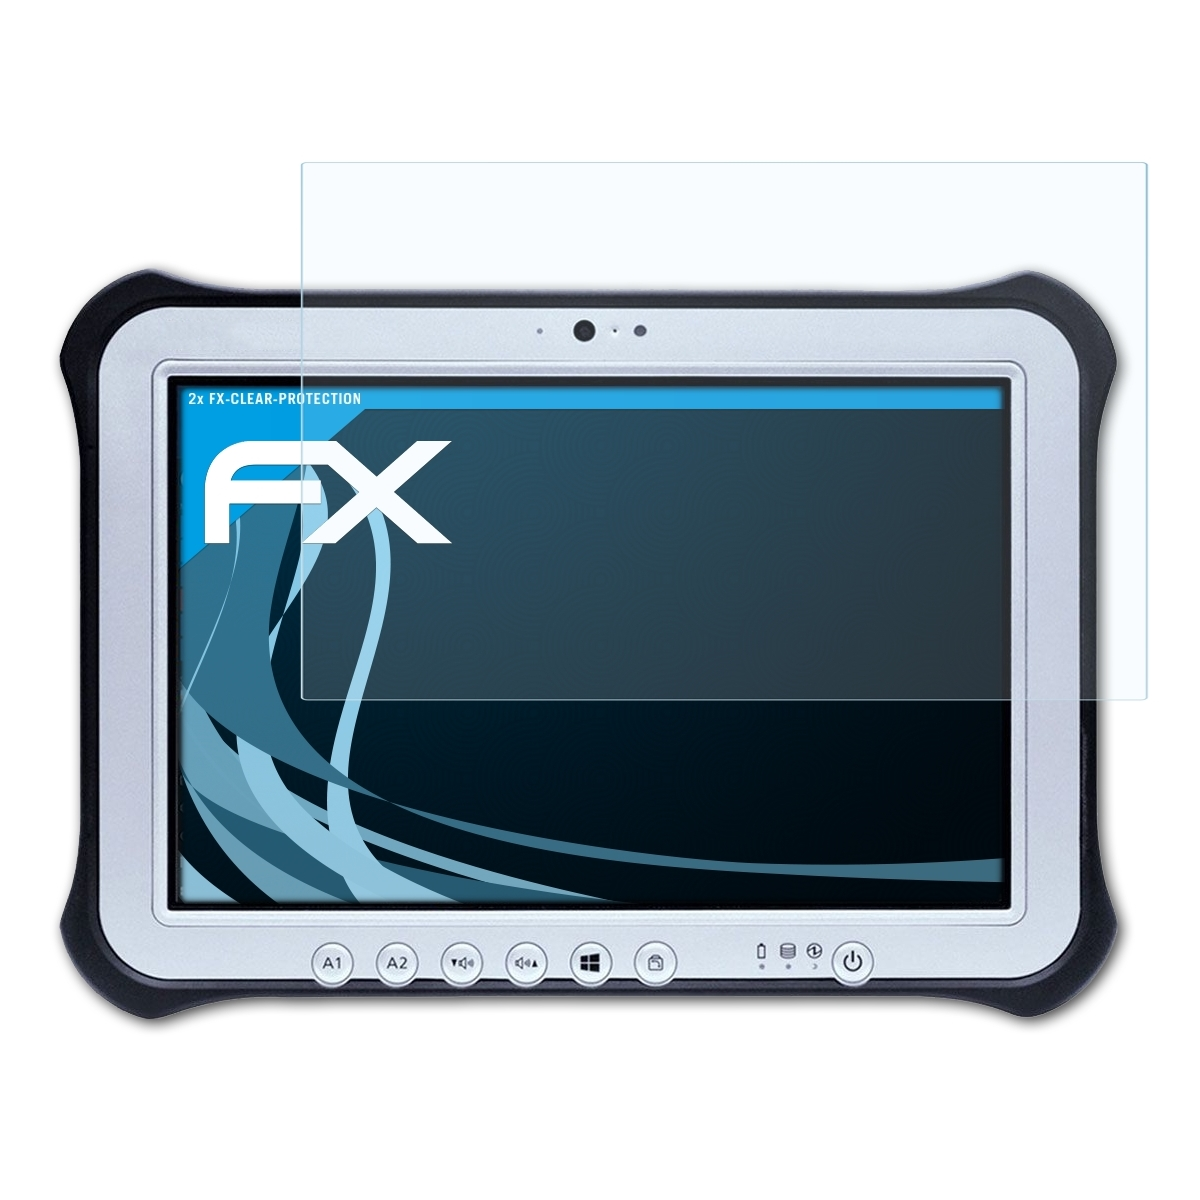 Displayschutz(für ATFOLIX FX-Clear ToughBook G1) Panasonic 2x